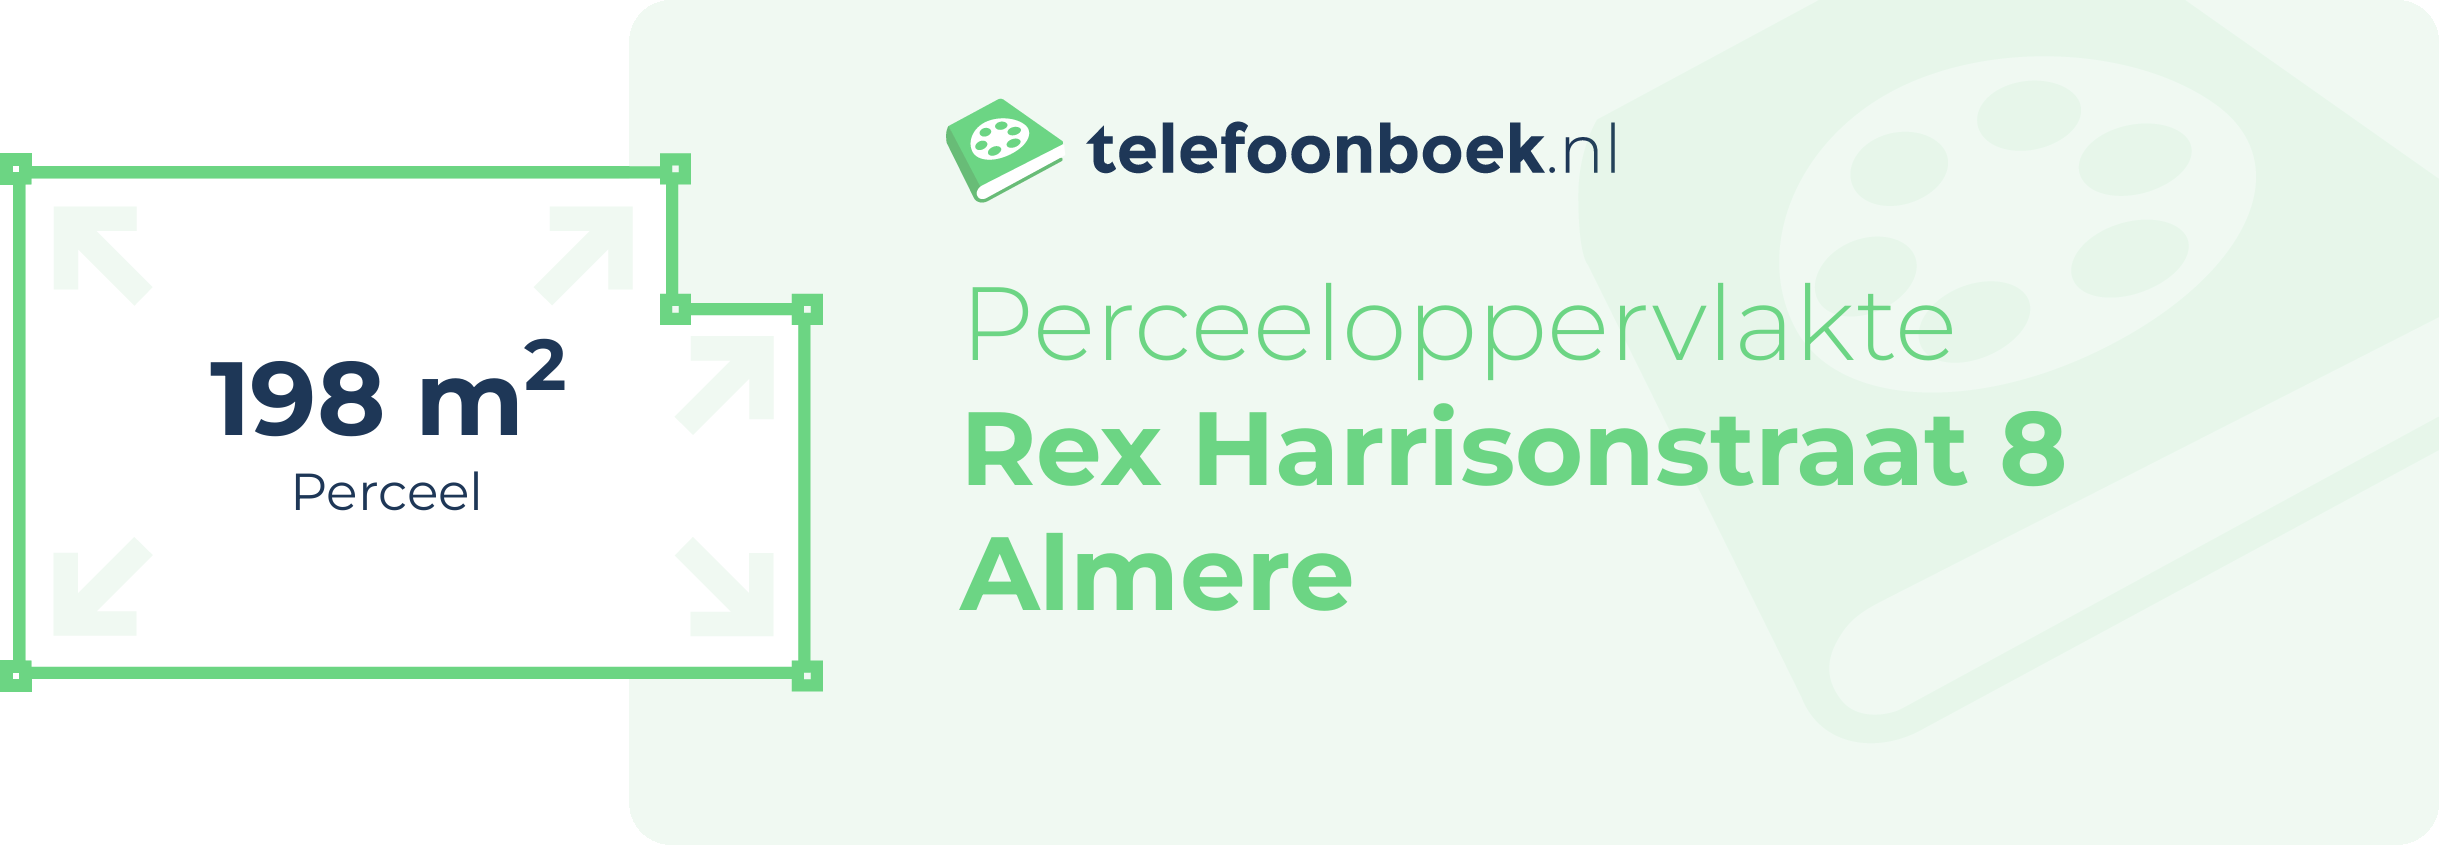 Perceeloppervlakte Rex Harrisonstraat 8 Almere